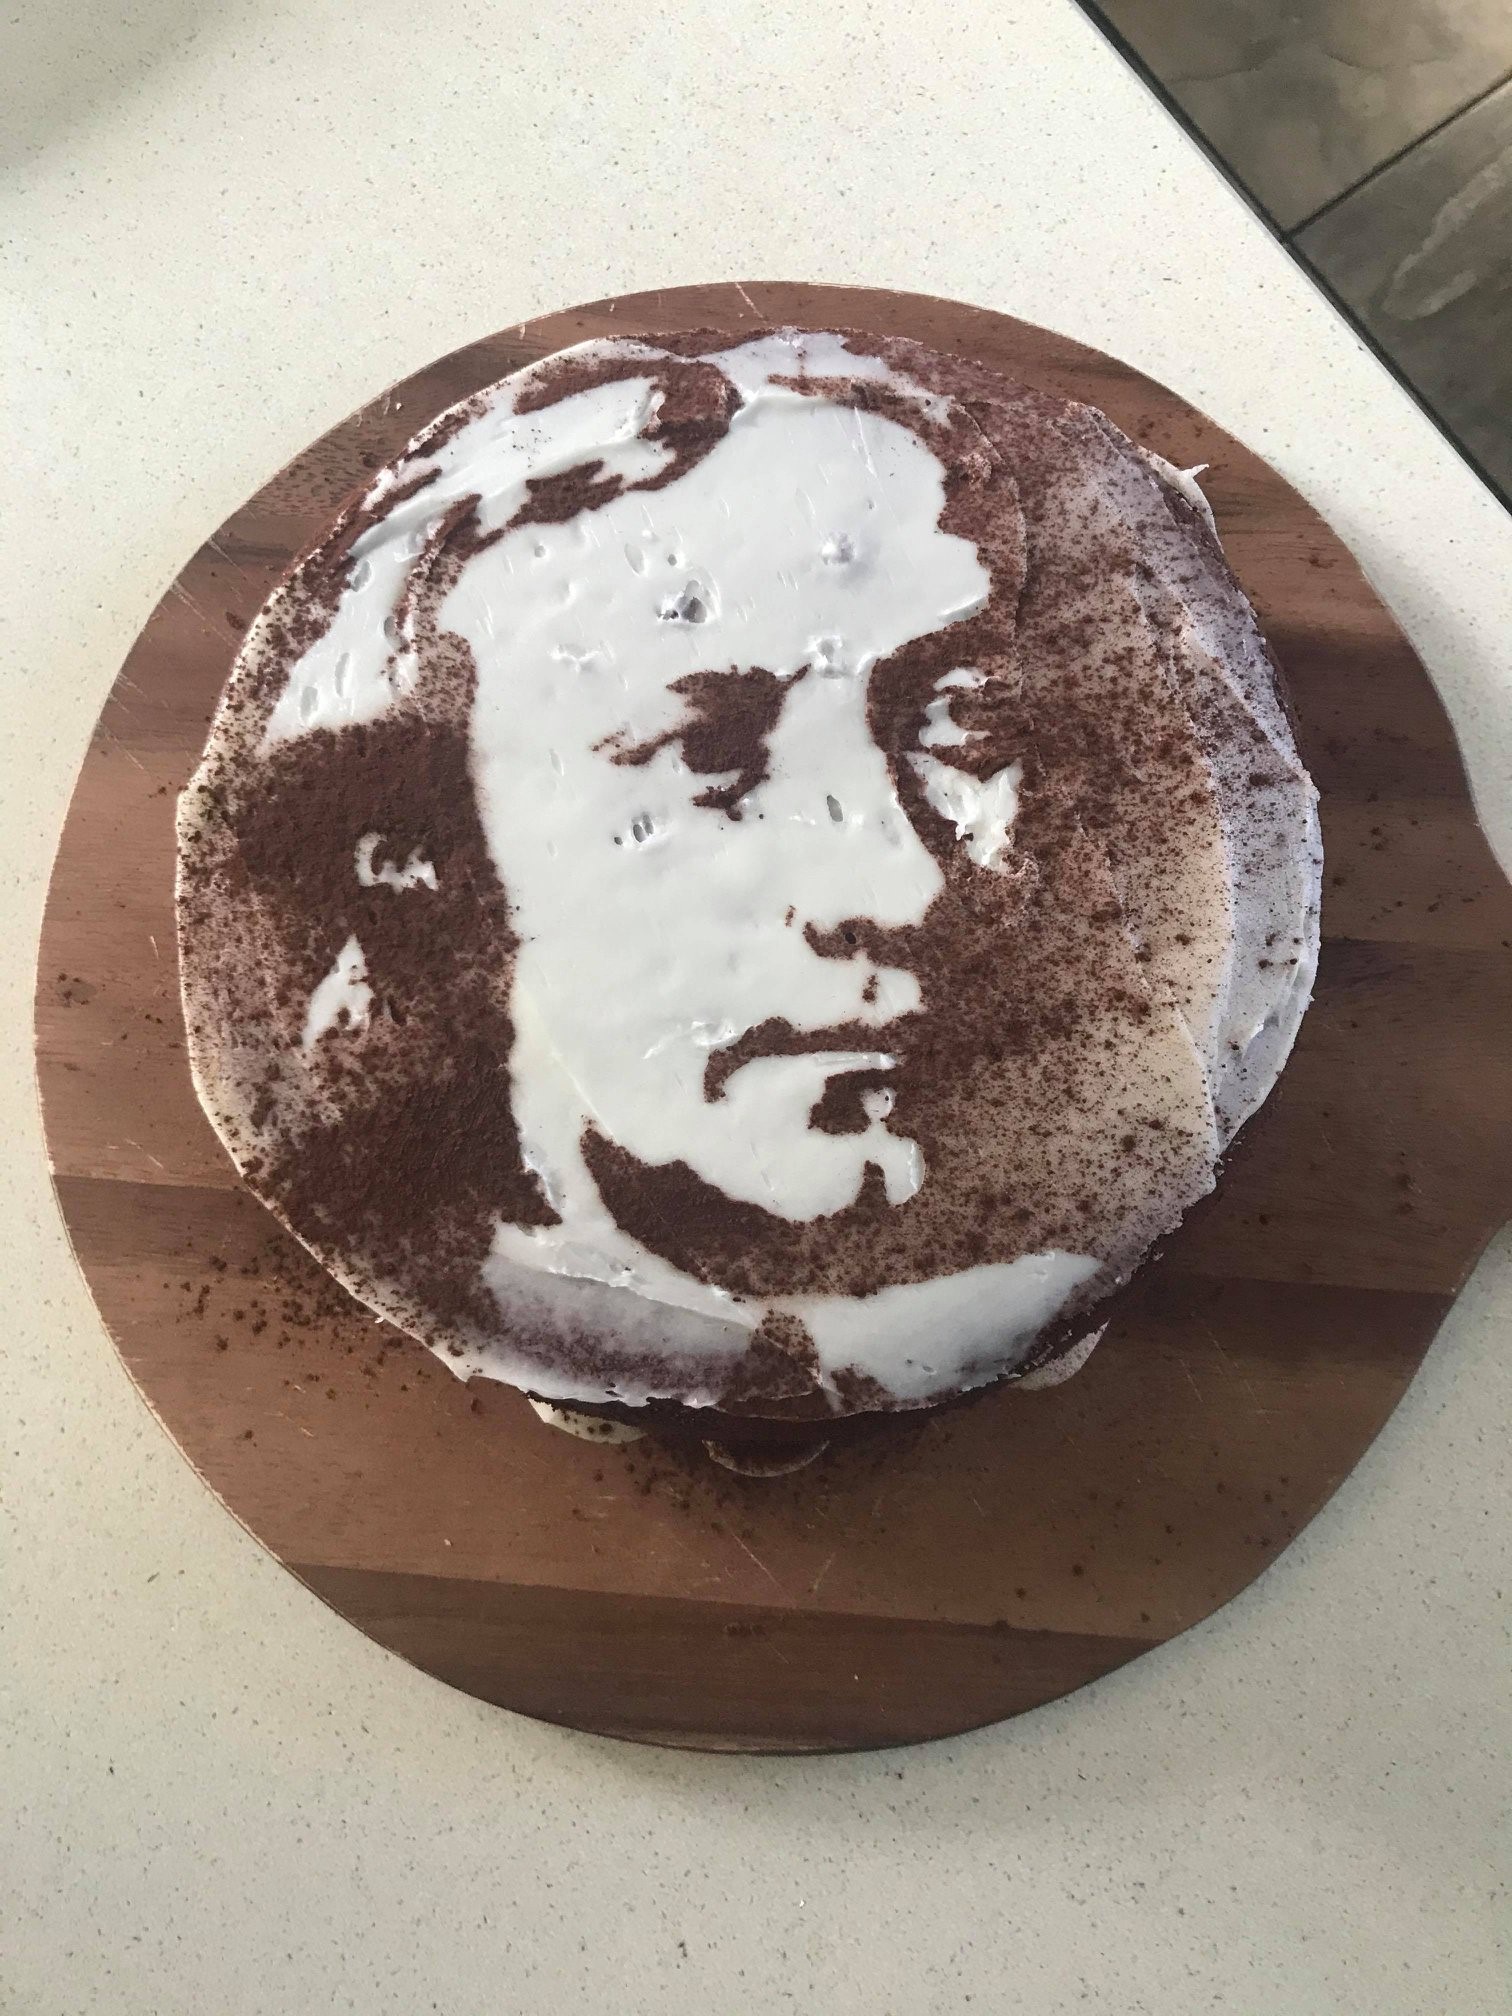 "Best Cromwell themed bake" baked by Anna Kelsall